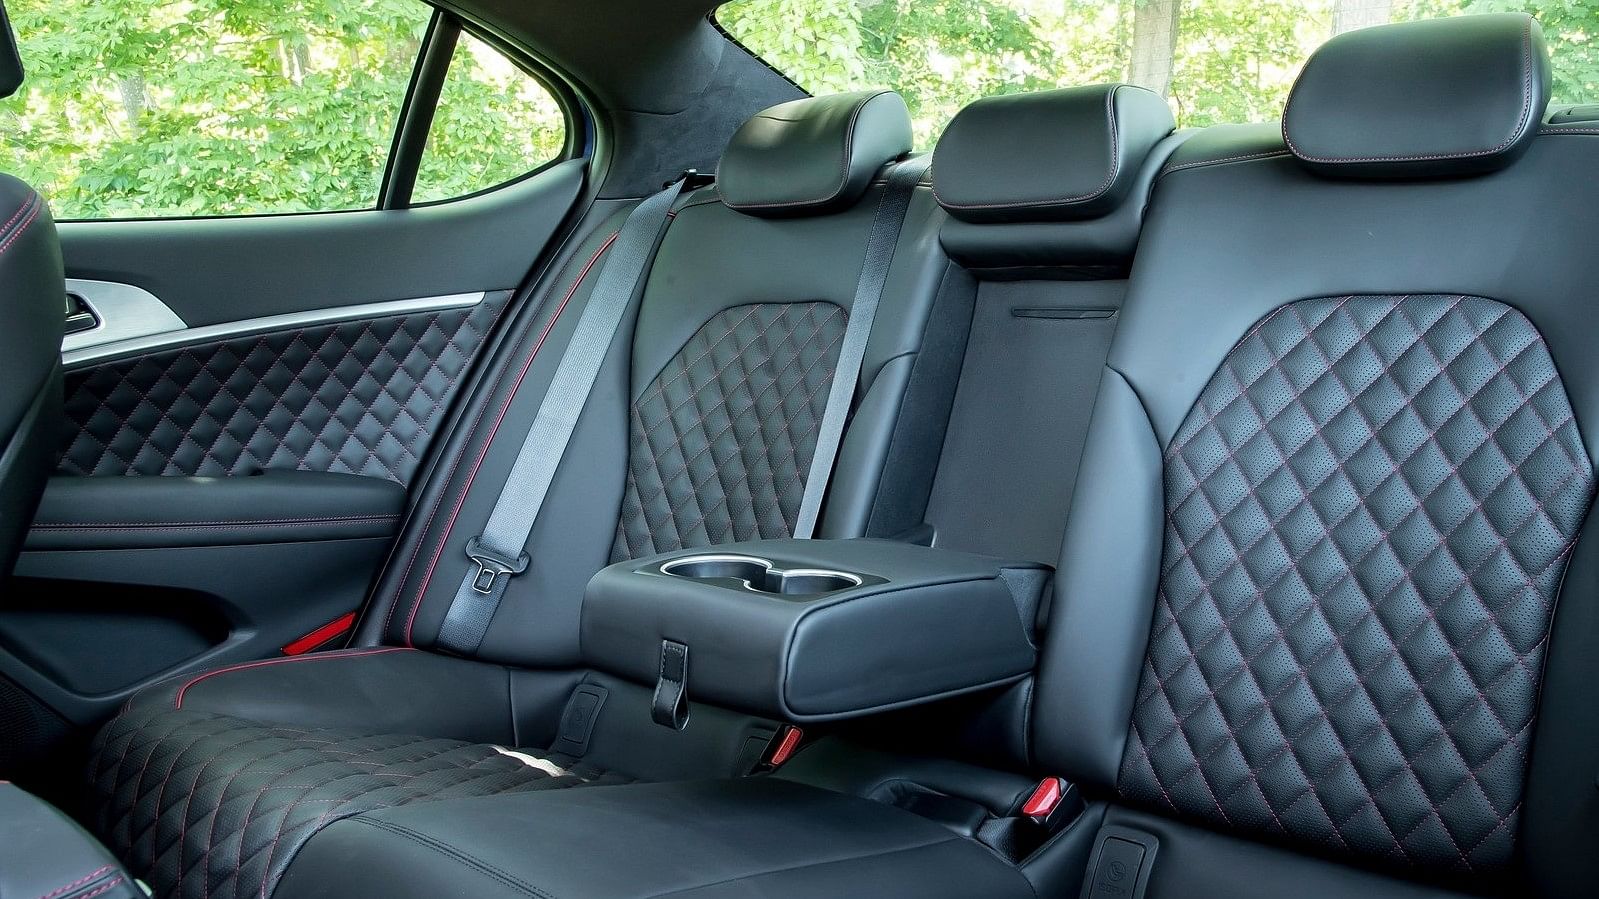 2021 Genesis G70 Interior Review Seating Infotainment Dashboard And Features Carindigo Com